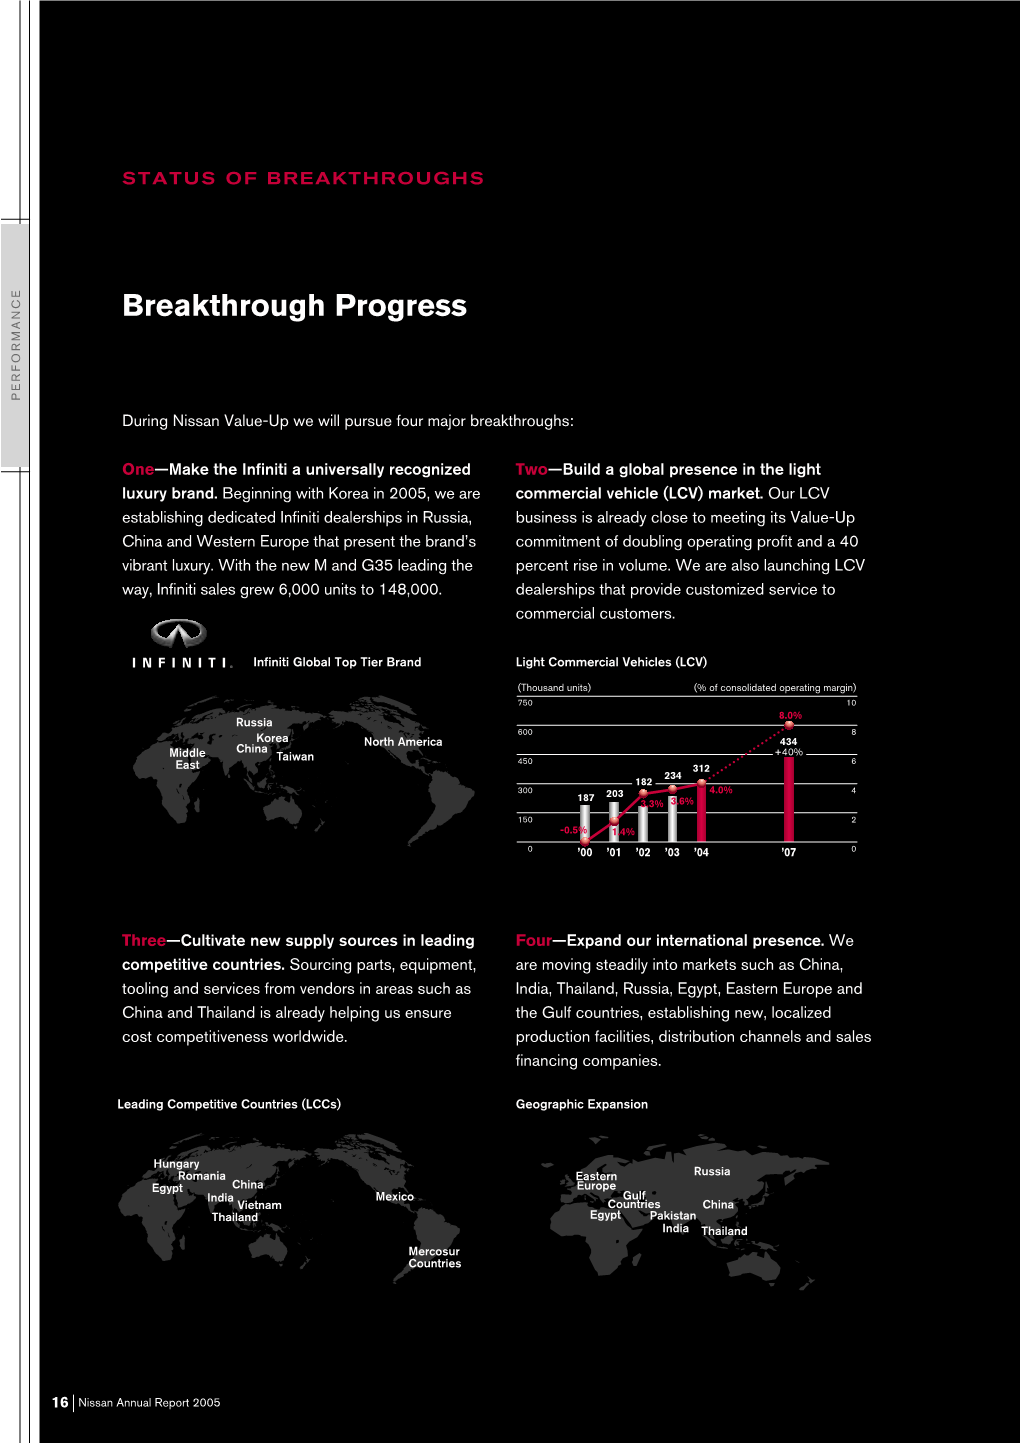 Breakthrough Progress PERFORMANCE During Nissan Value-Up We Will Pursue Four Major Breakthroughs